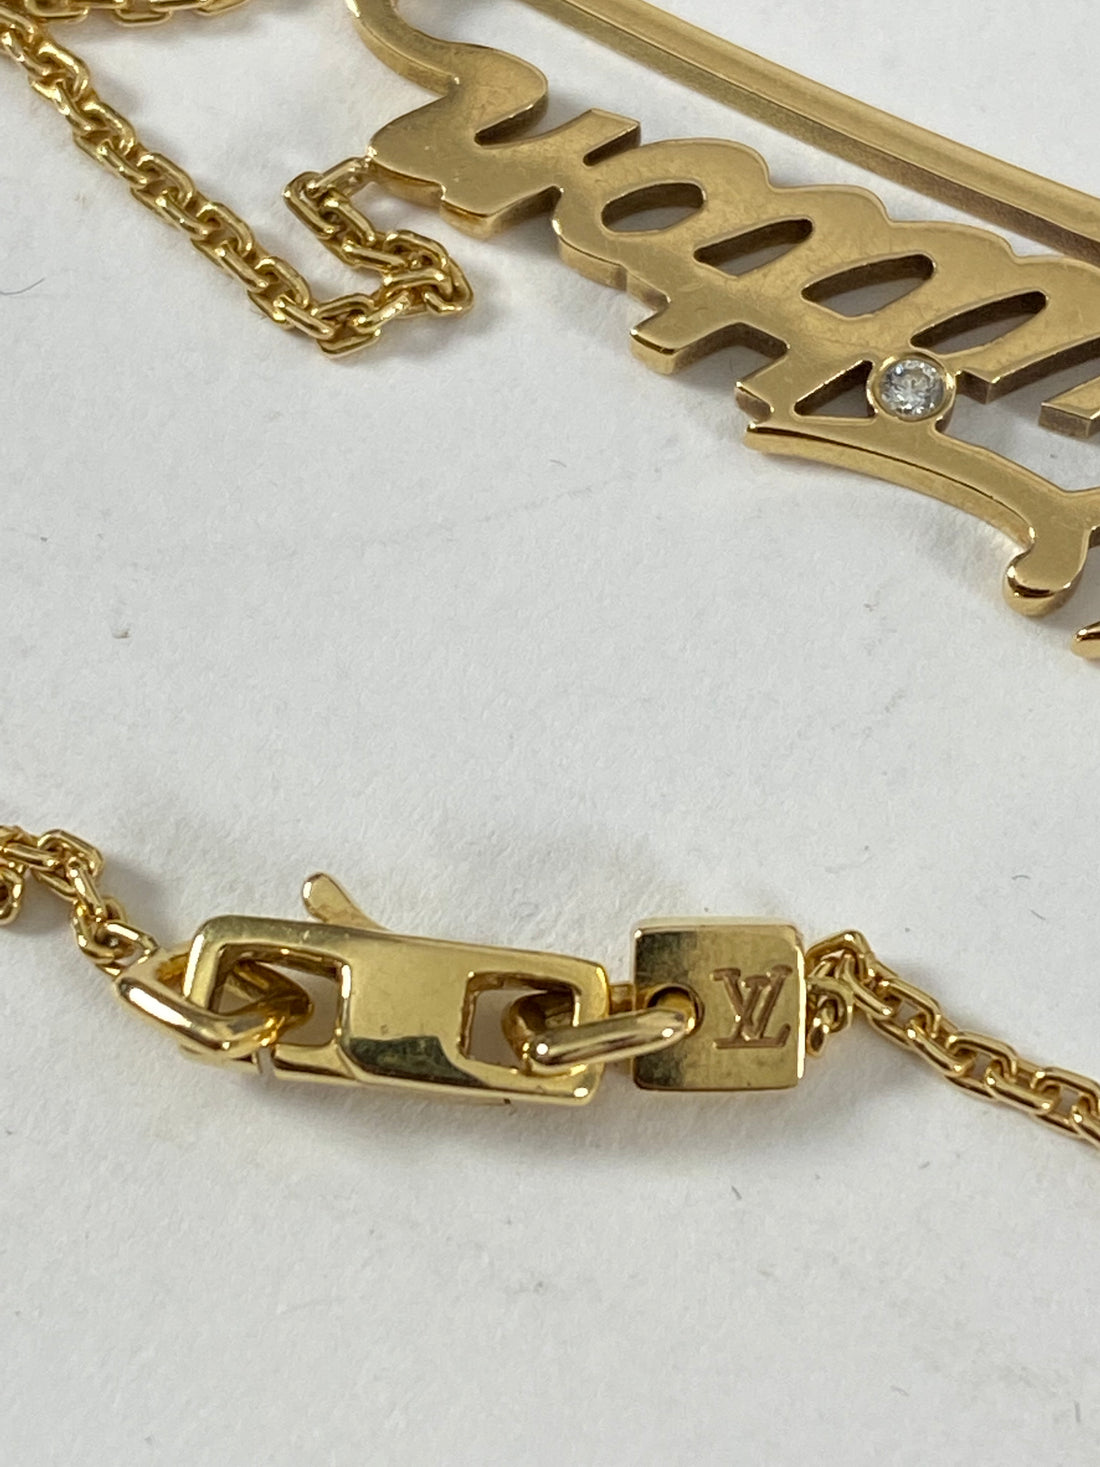 Louis Vuitton 18k Yellow Gold Diamond Signature Necklace